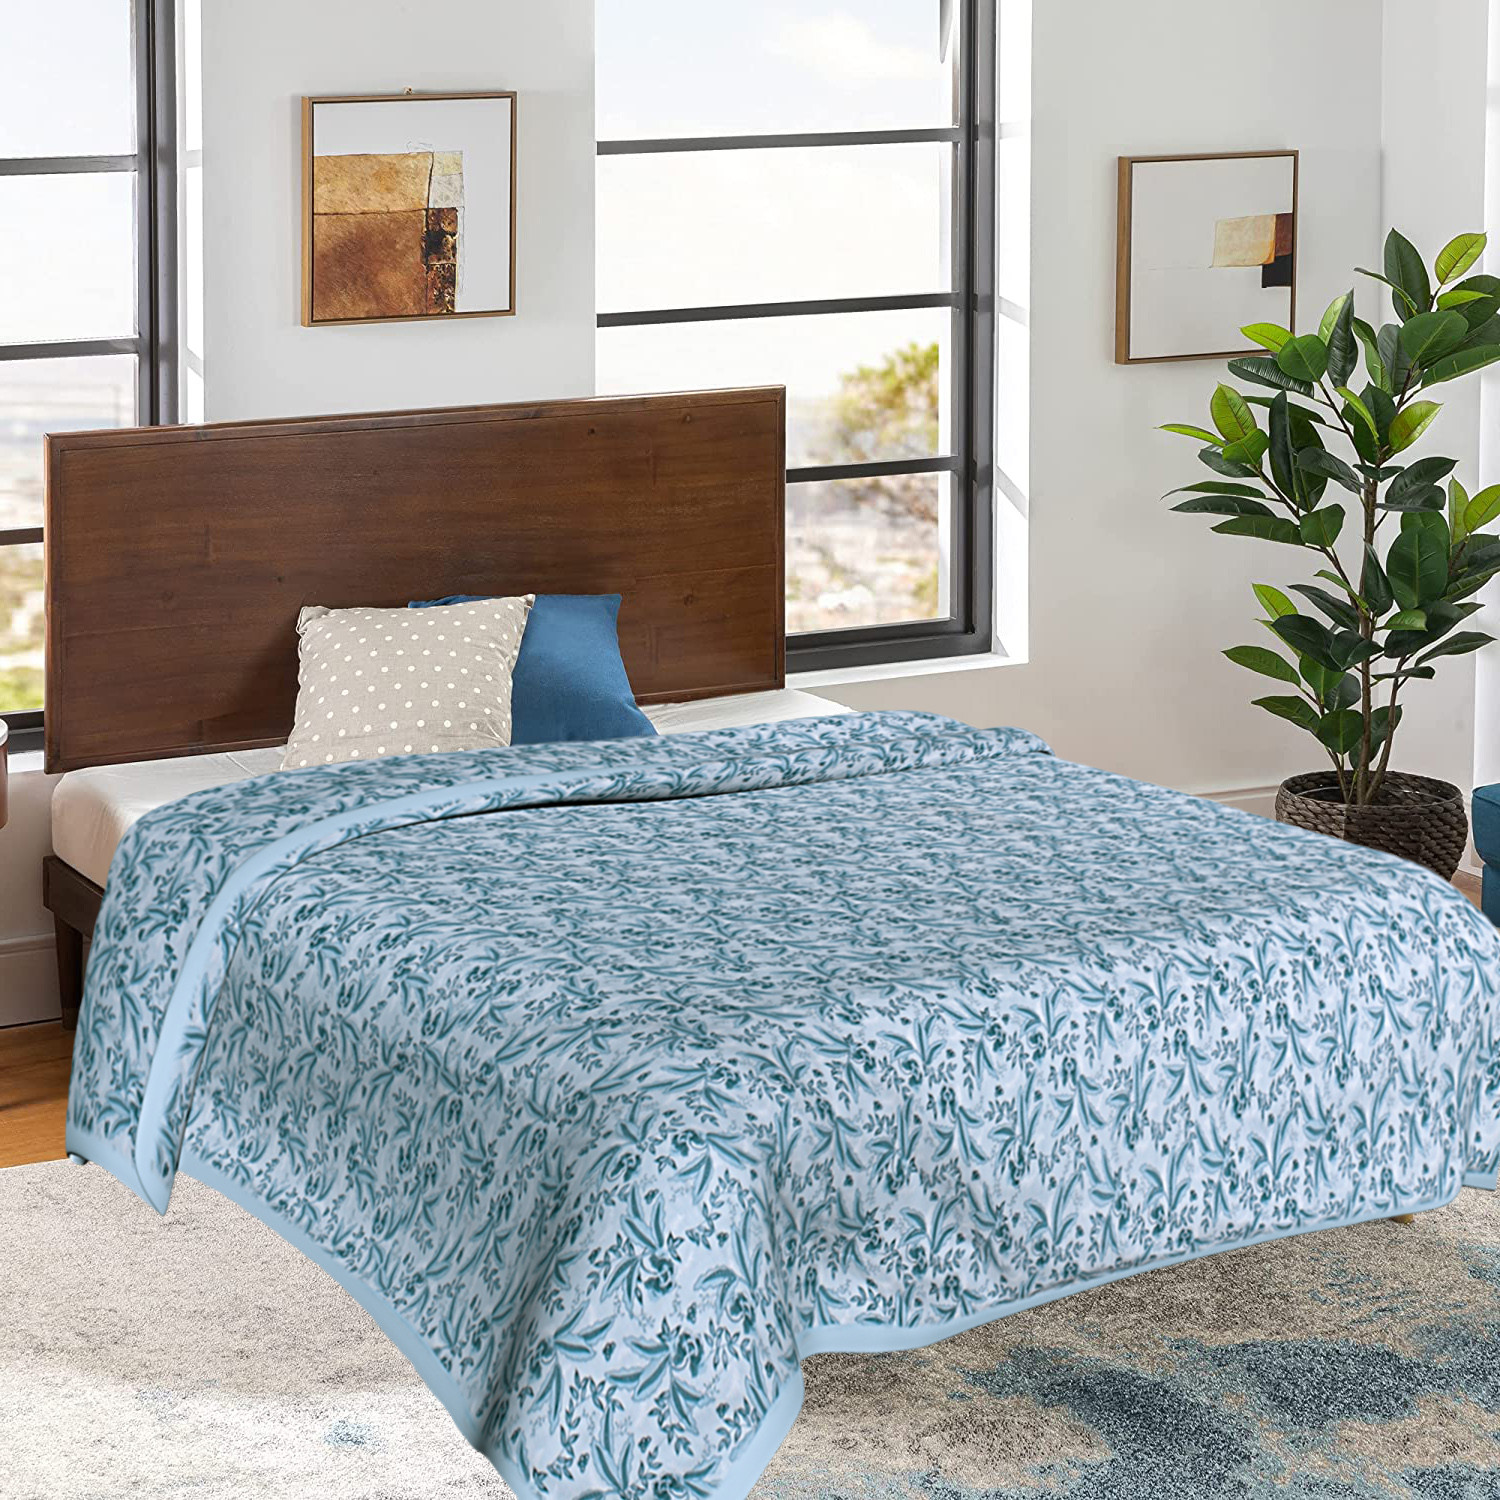 Kuber Industries Cotton Soft Lightweight Tropical Plant Design Reversible Single Bed Dohar | Blanket | AC Quilt for Home & Travel (Sky Blue)